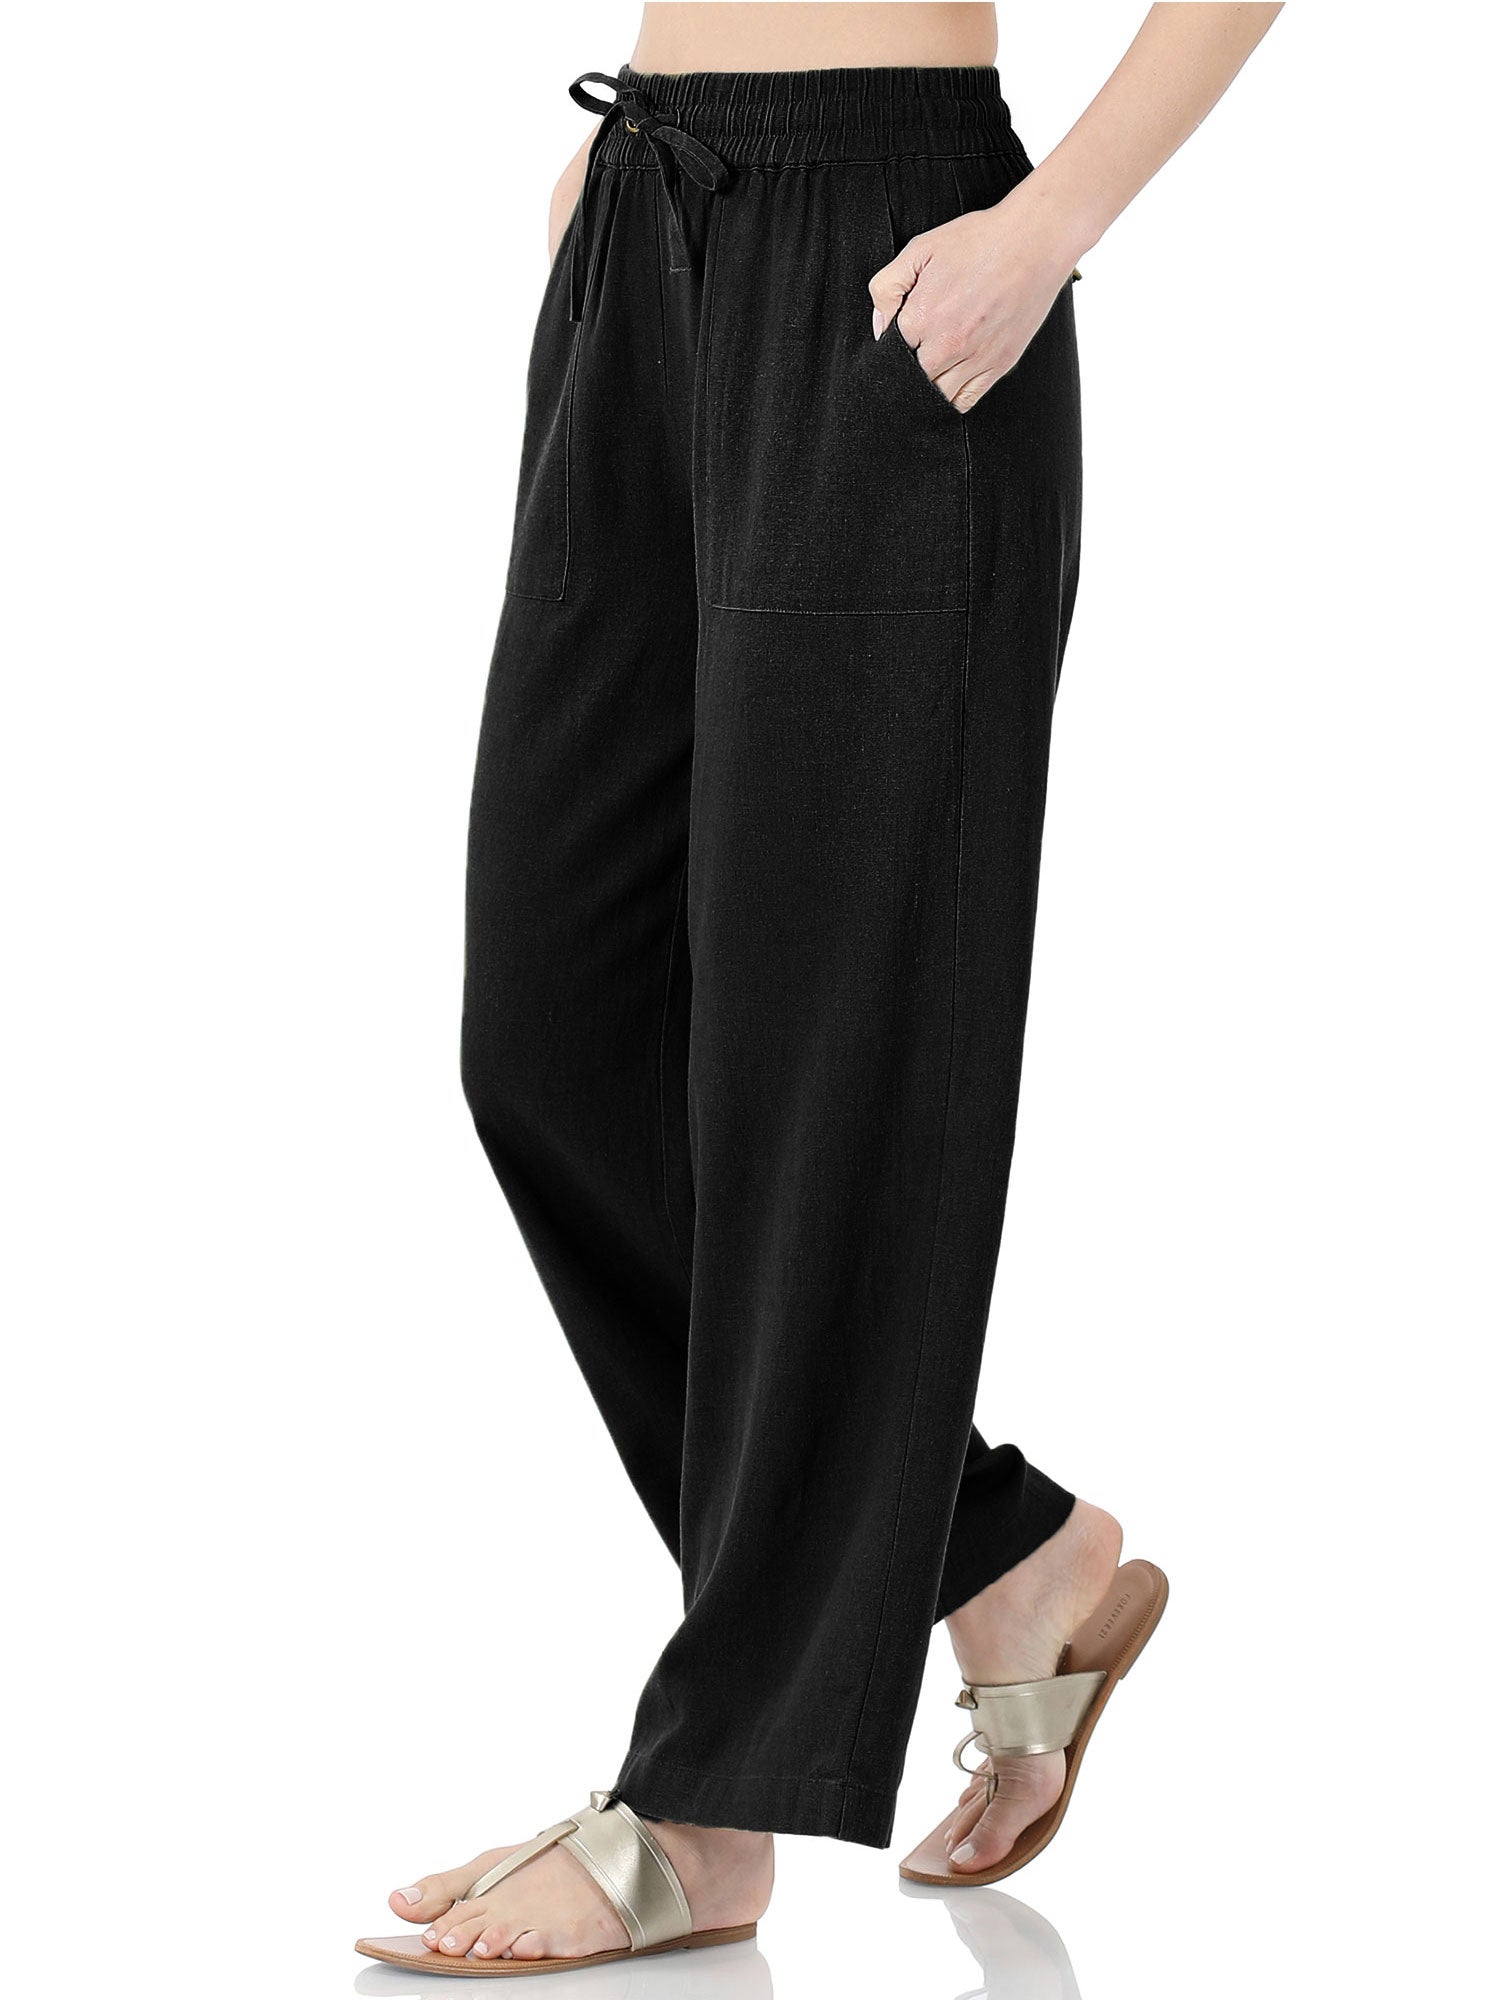 KSODFNXH Linen Pants Women Casual Drawstring Elastic Waist Solid